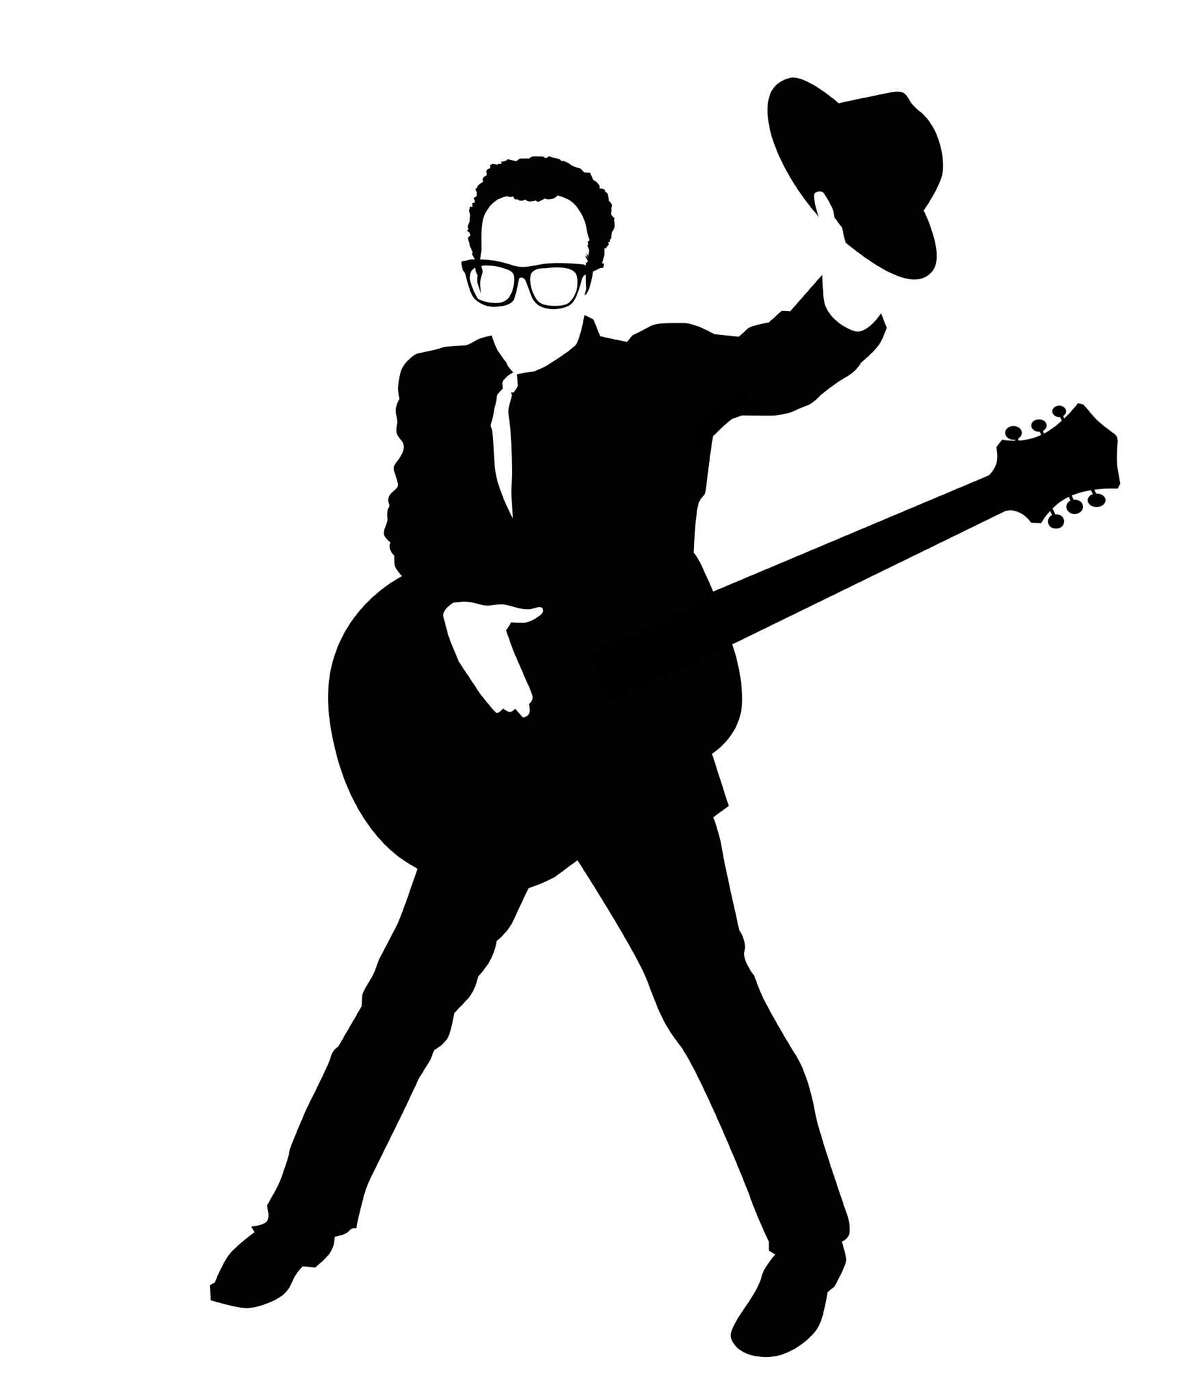 Elvis Costello illustration by Robert Wuensche / Houston Chronicle